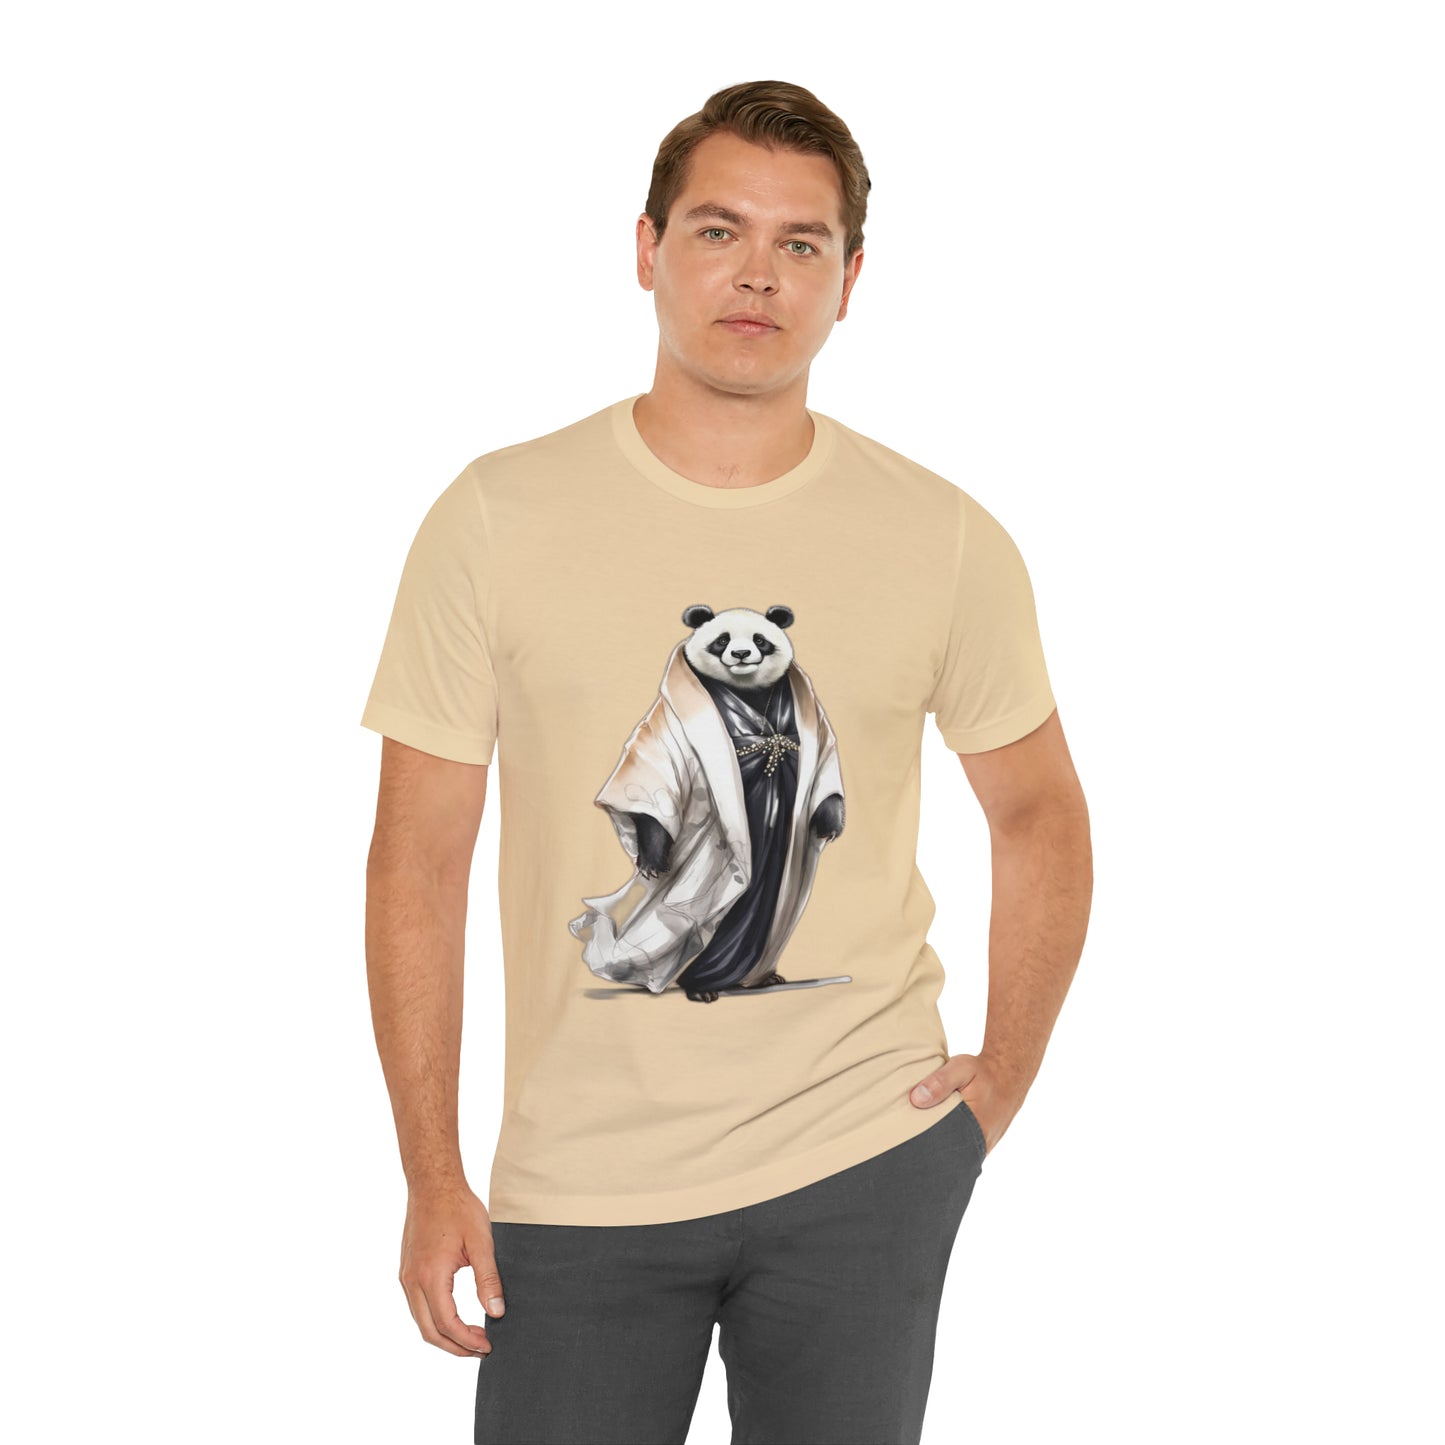 "Runway Panda" Unisex Jersey Short Sleeve Tee